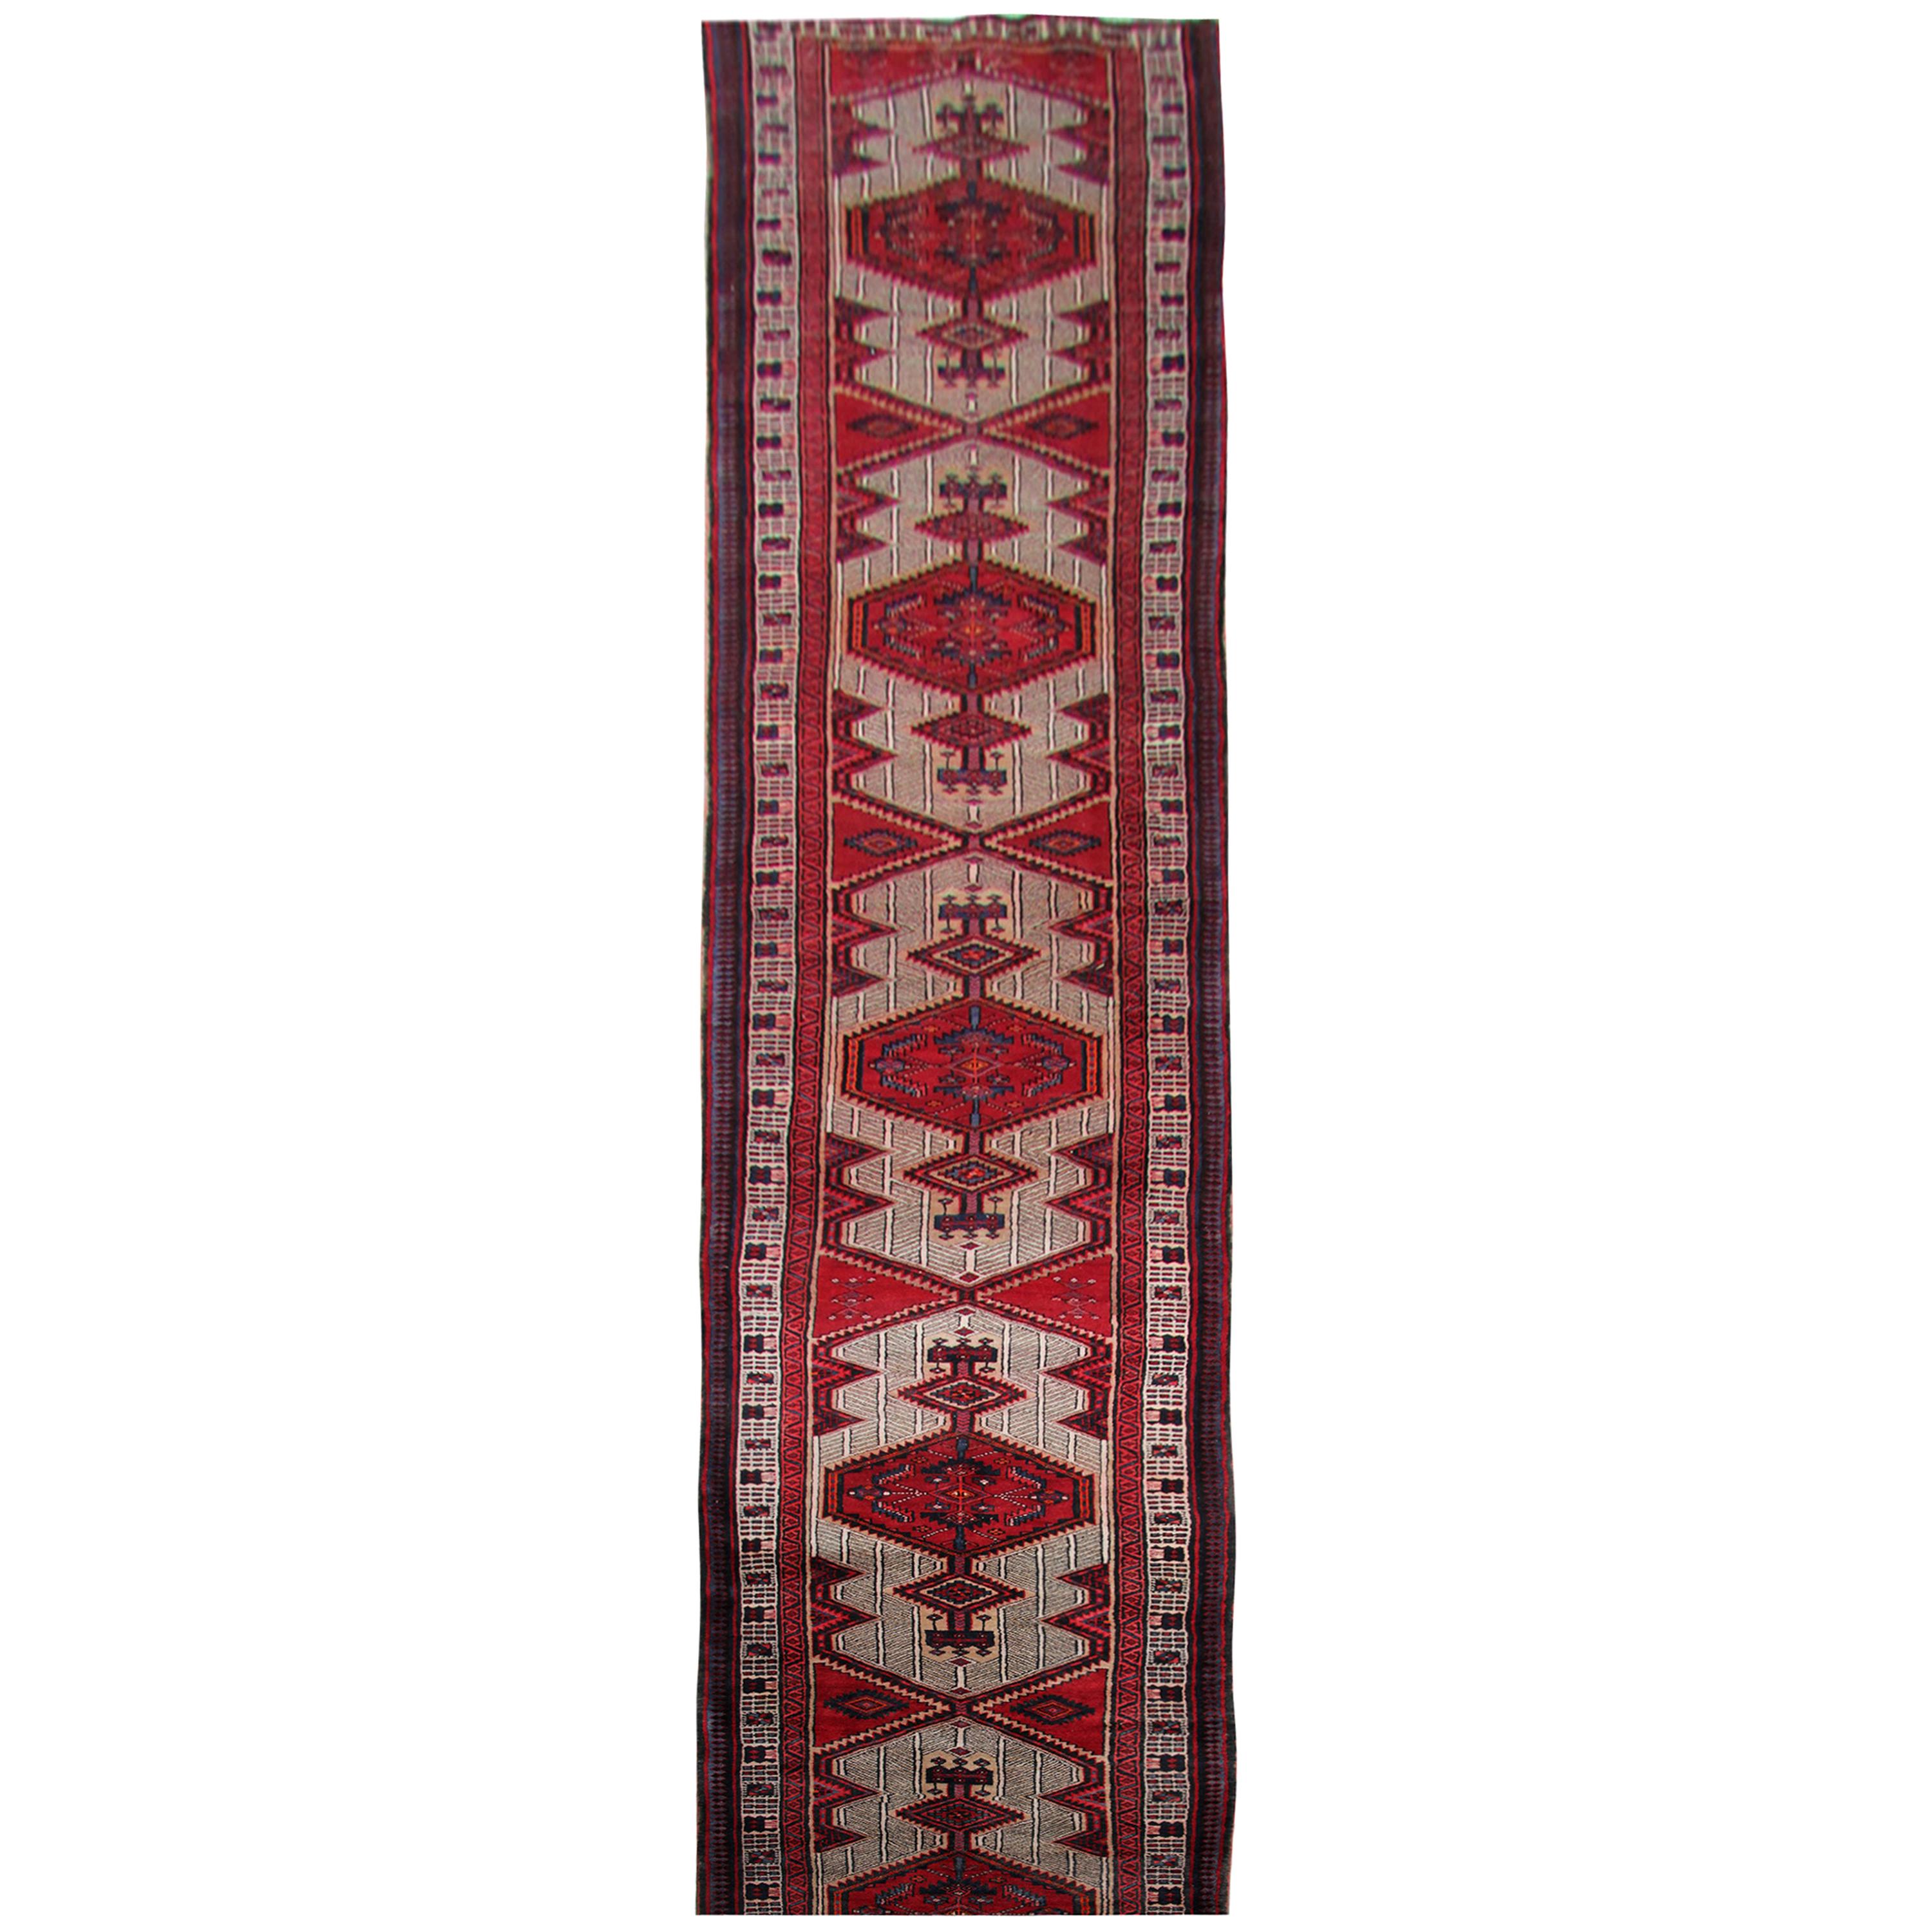 Handmade Runners and Rugs, Oriental Carpet Red Wool Vintage Rugs For Sale